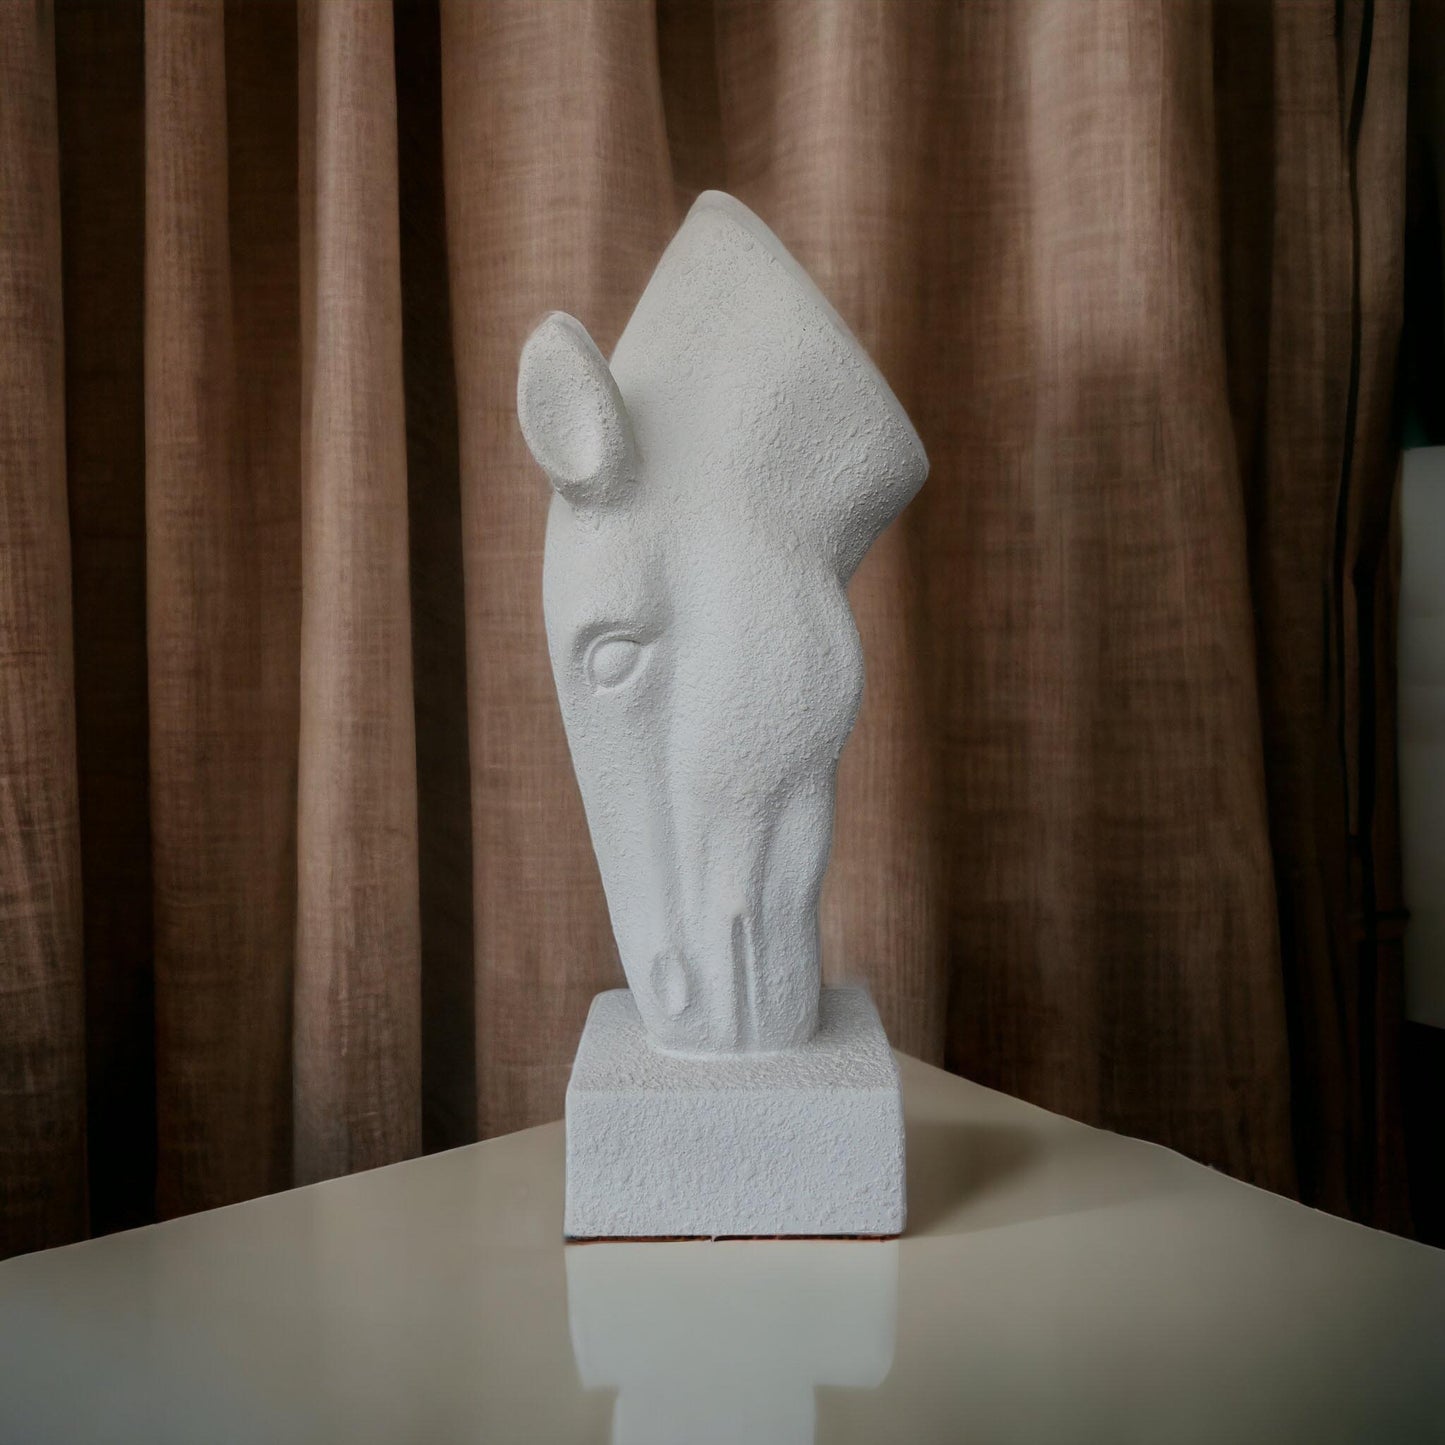 White horse face sculpture by Satgurus